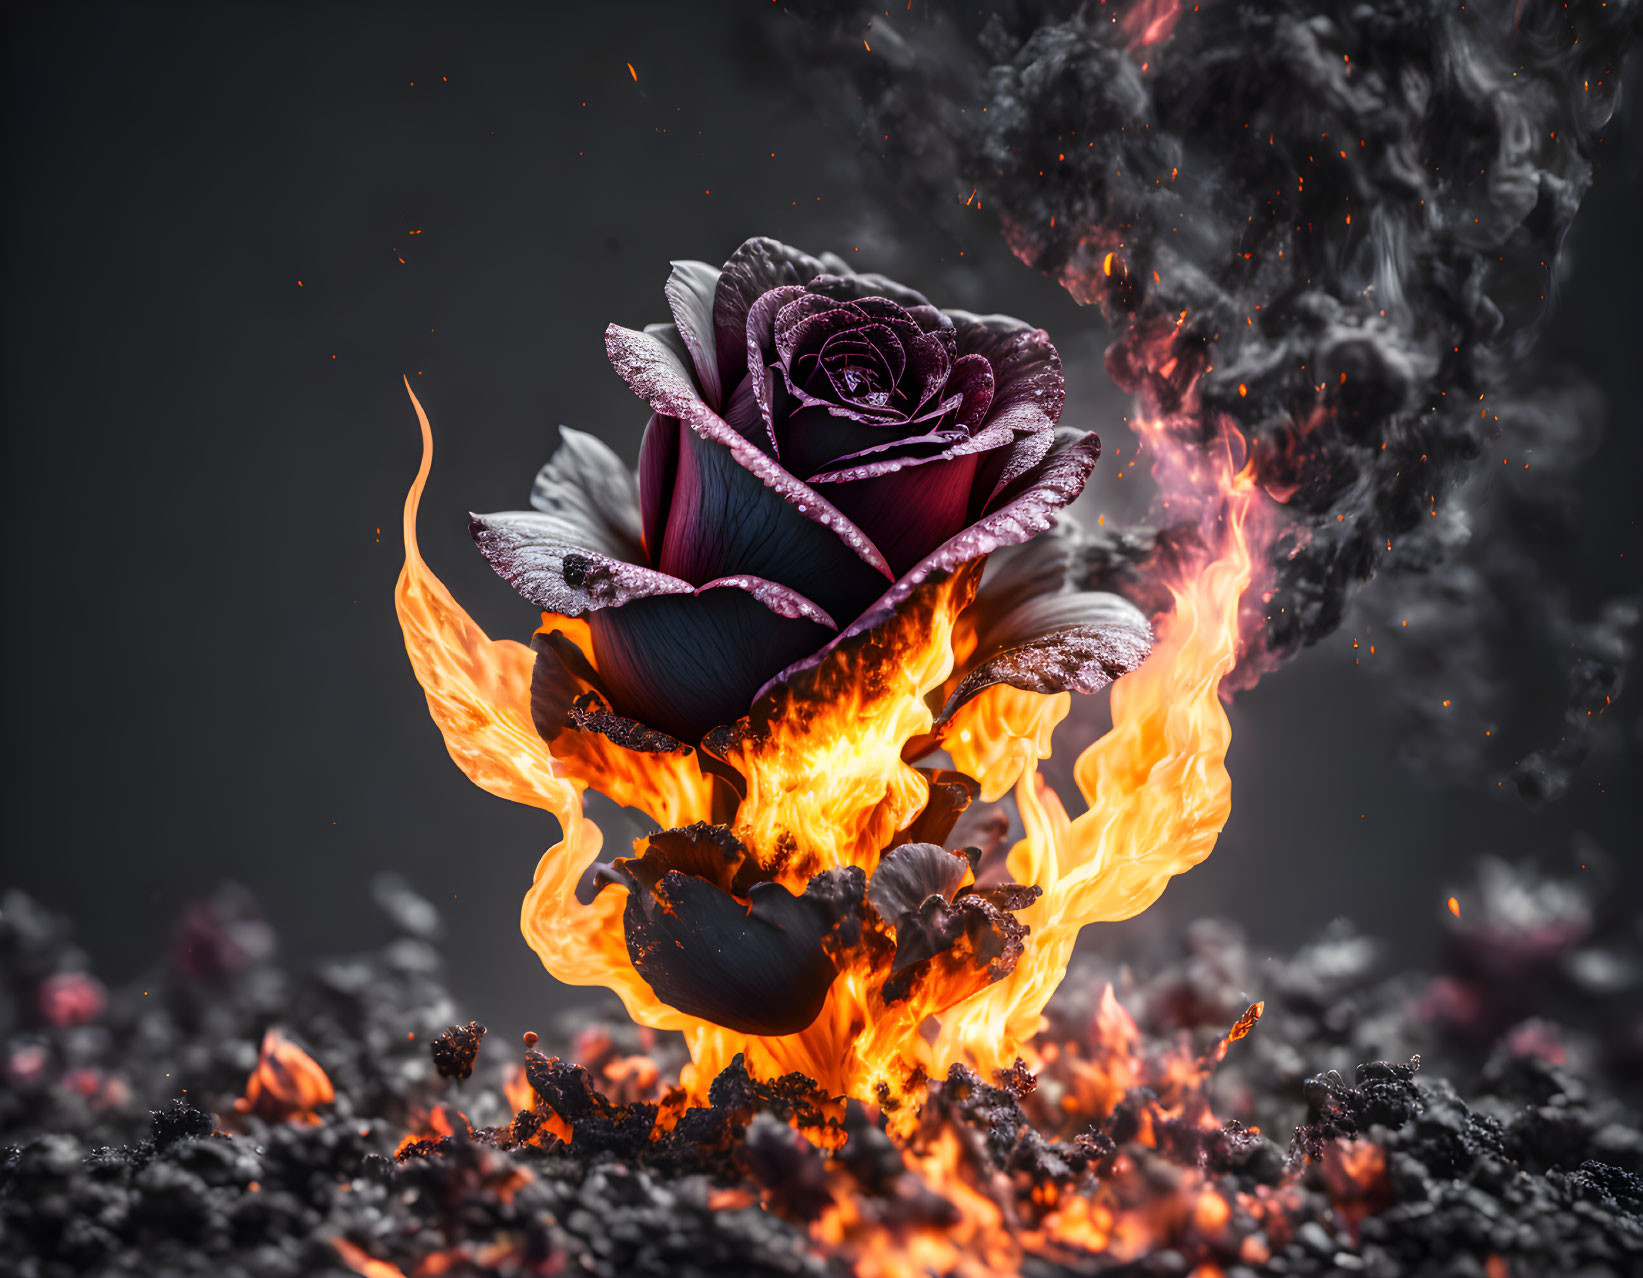 Rose of Death